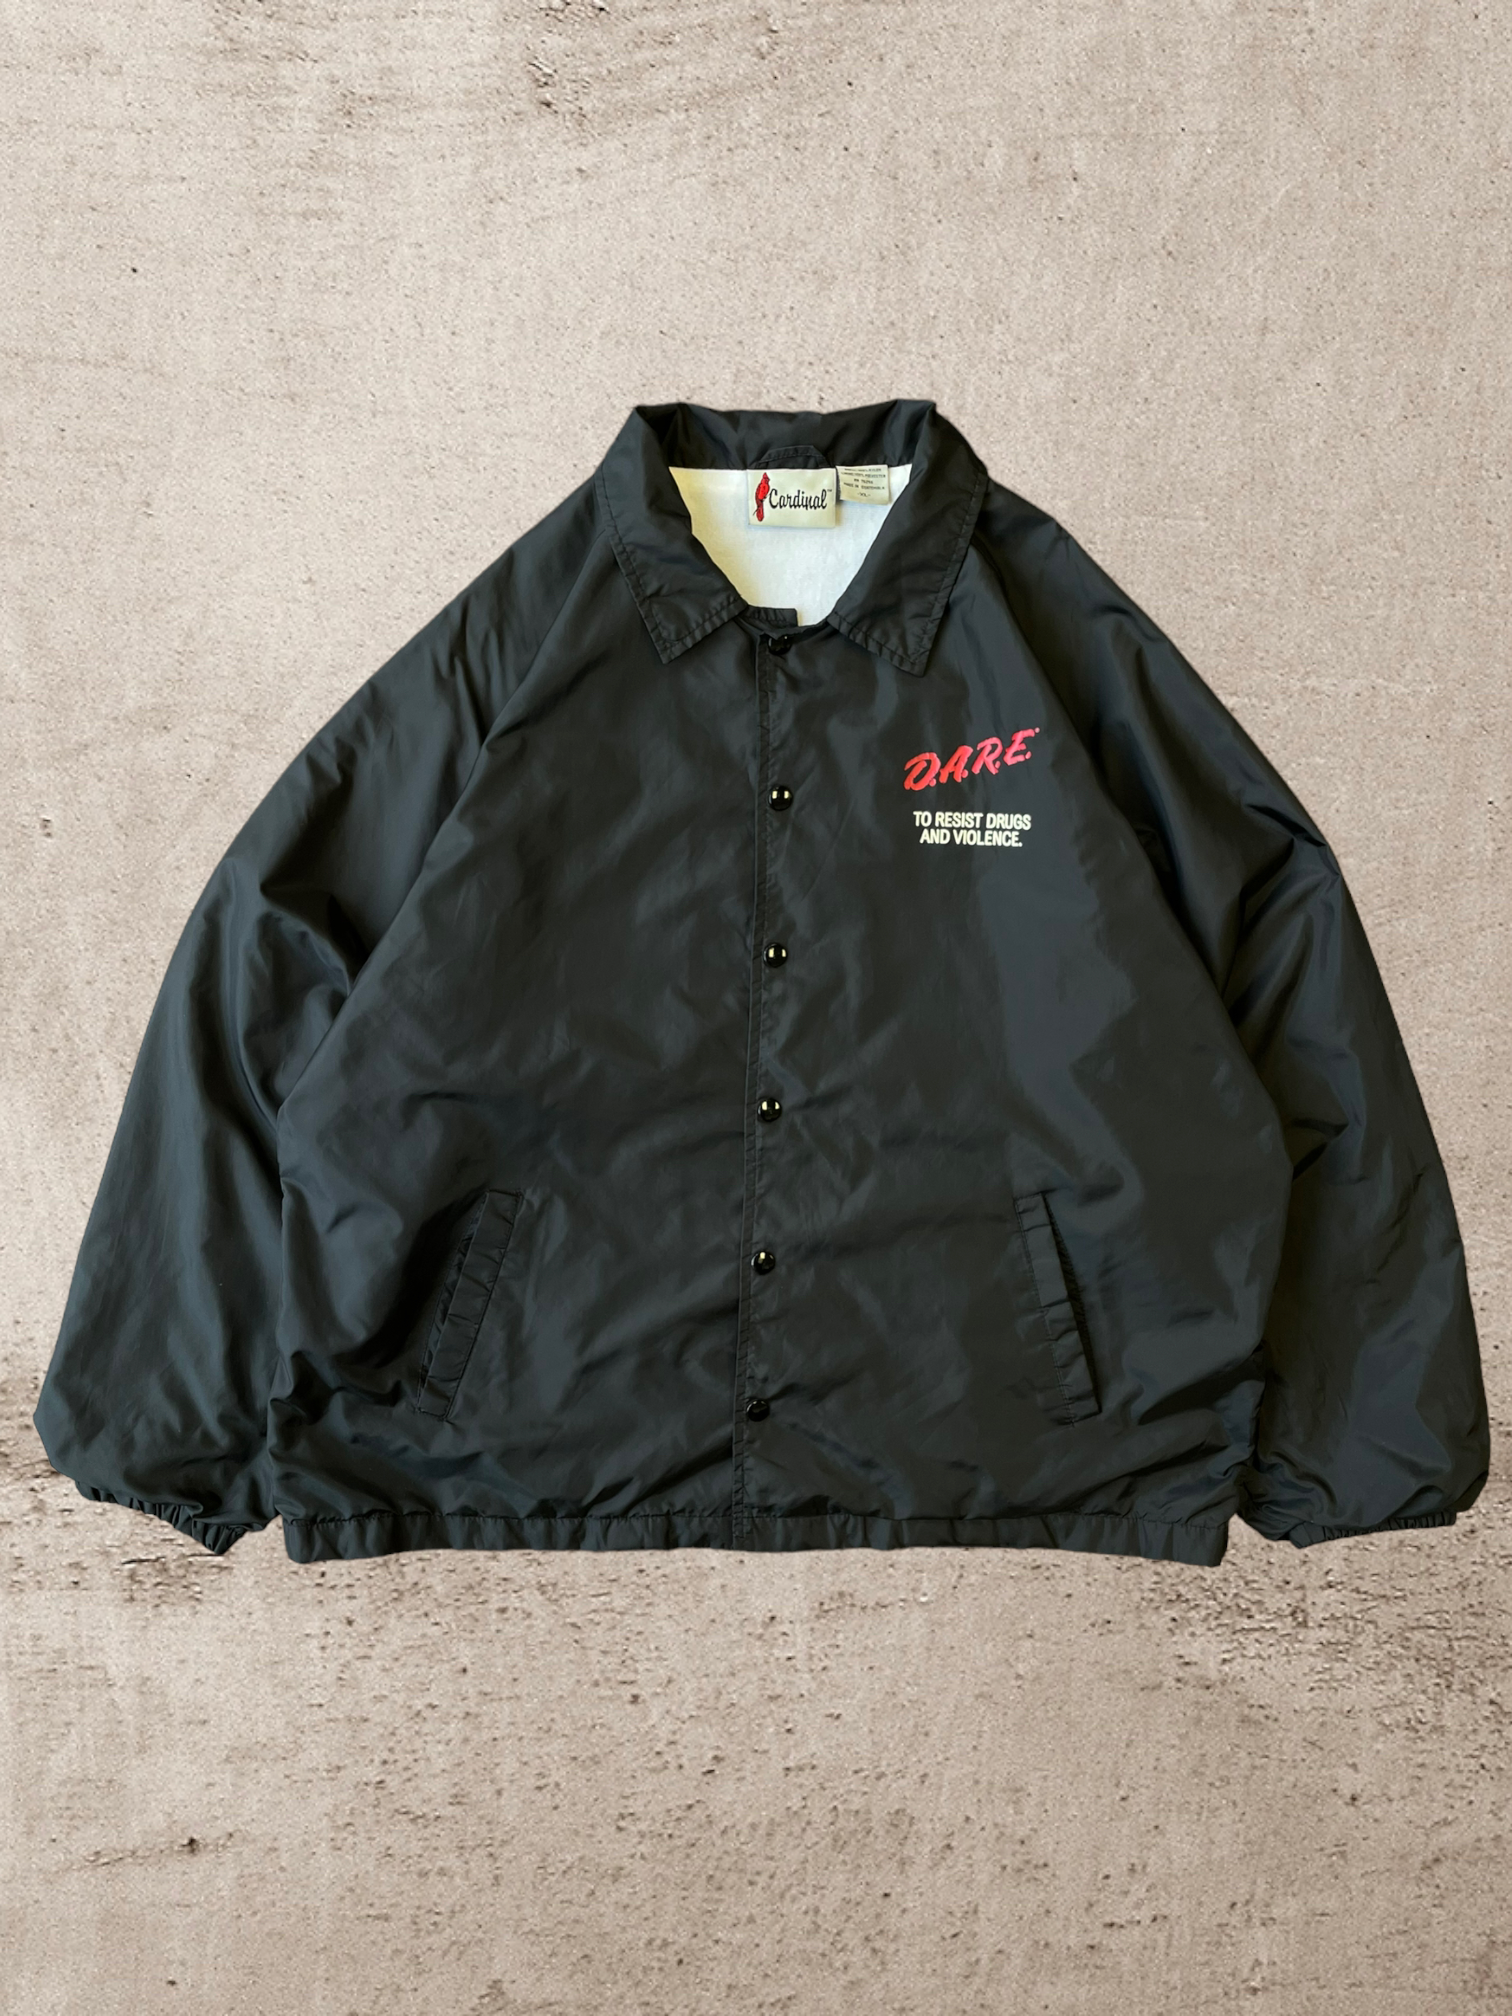 90s Dare Coaches Jacket - X-Large